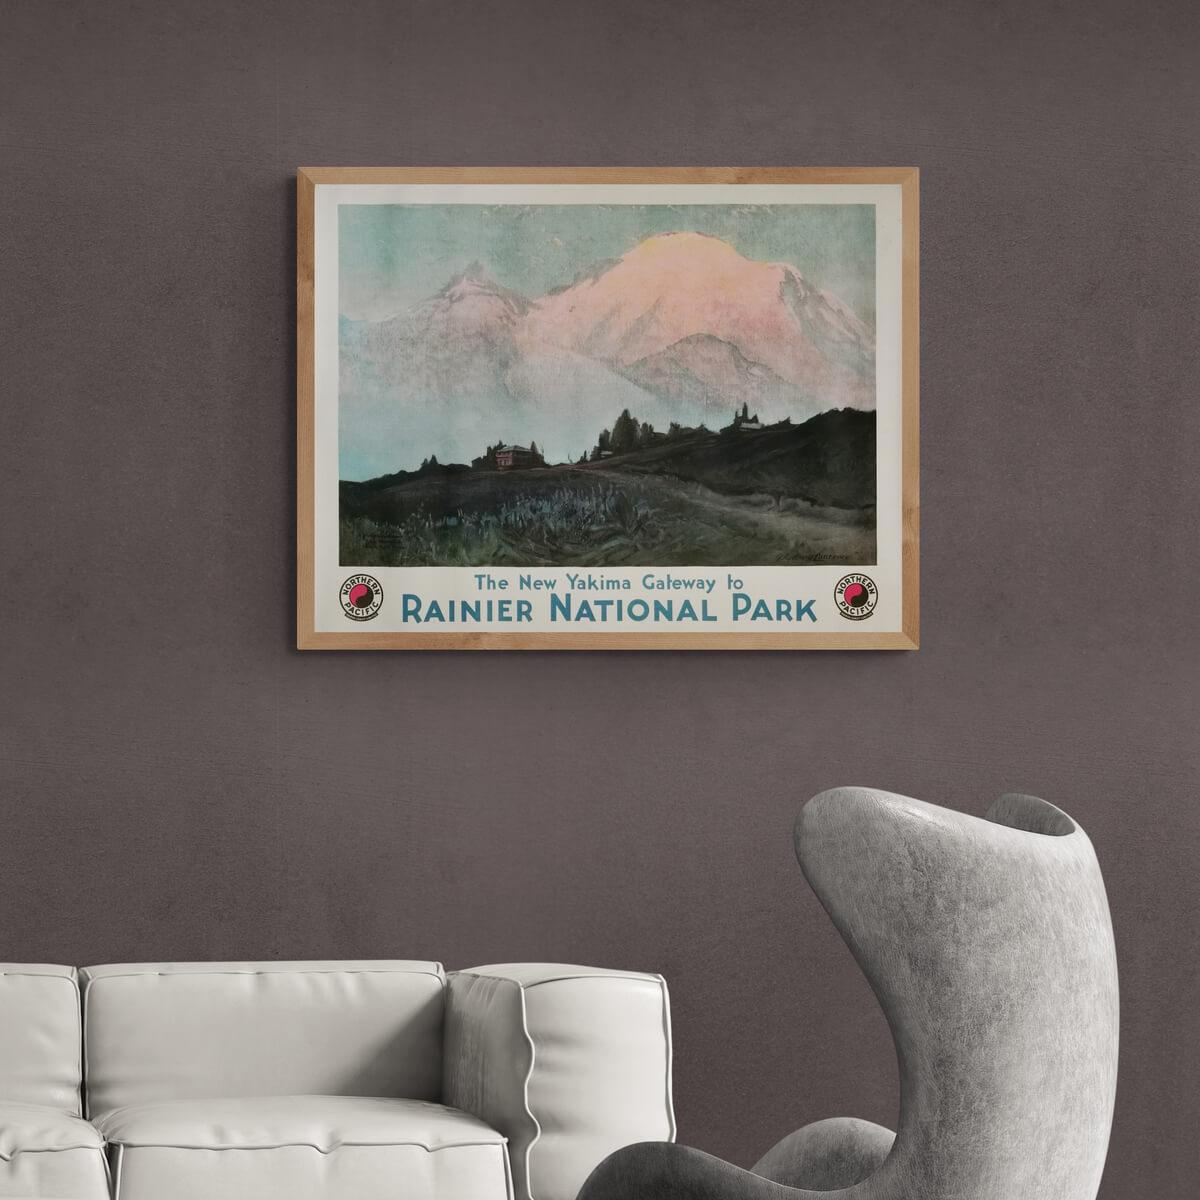 rainier-national-park-plakat